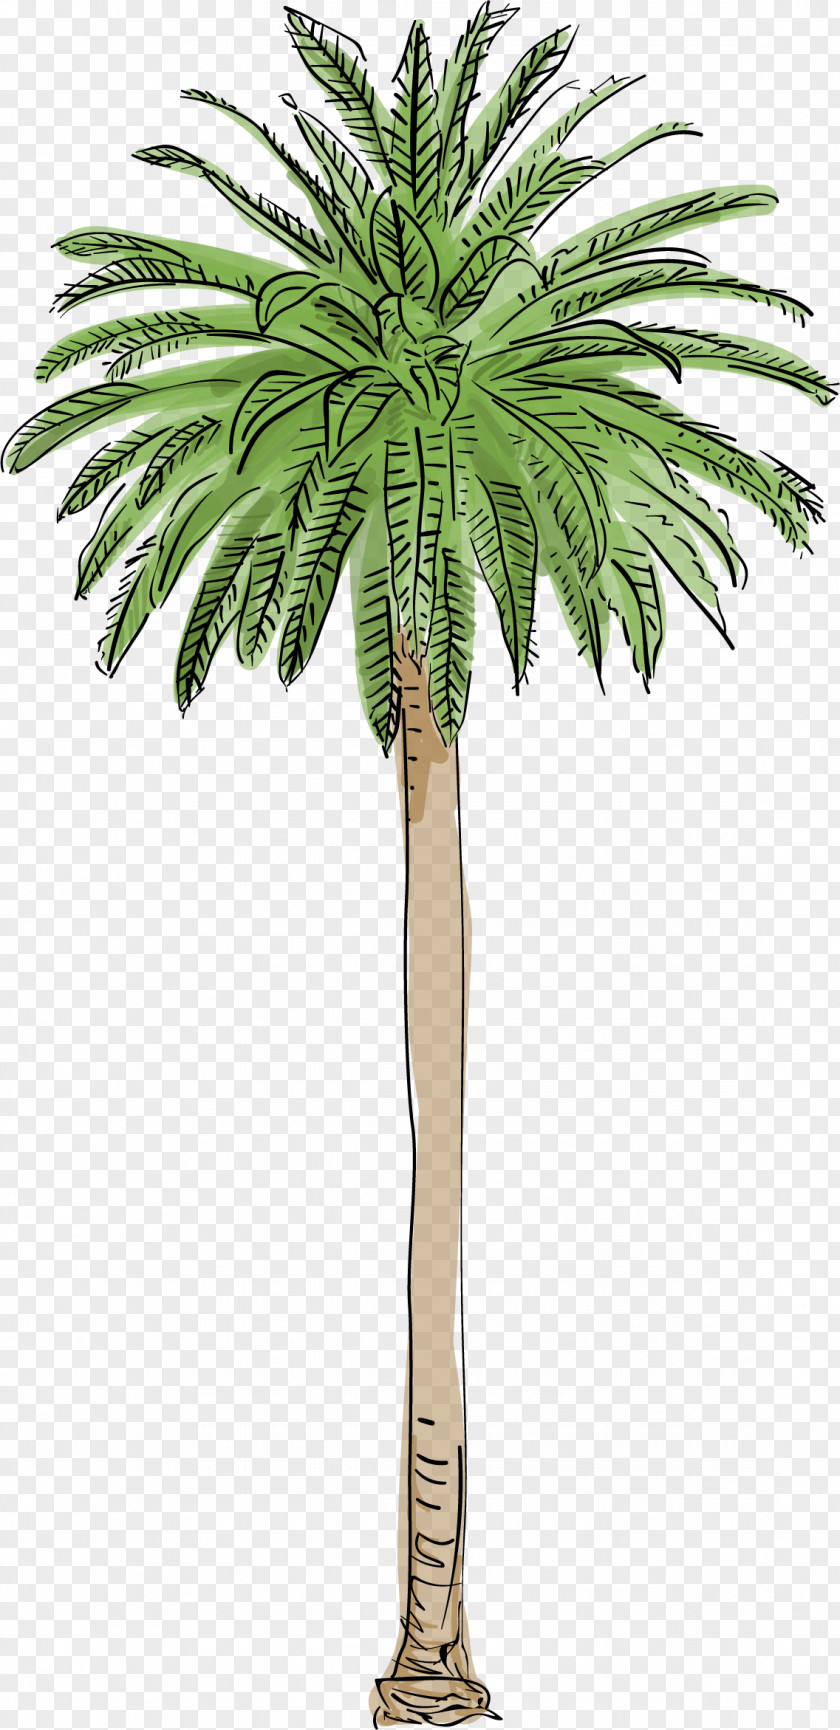 Date Palm Los Angeles Washingtonia Filifera Robusta Arecaceae Tree PNG